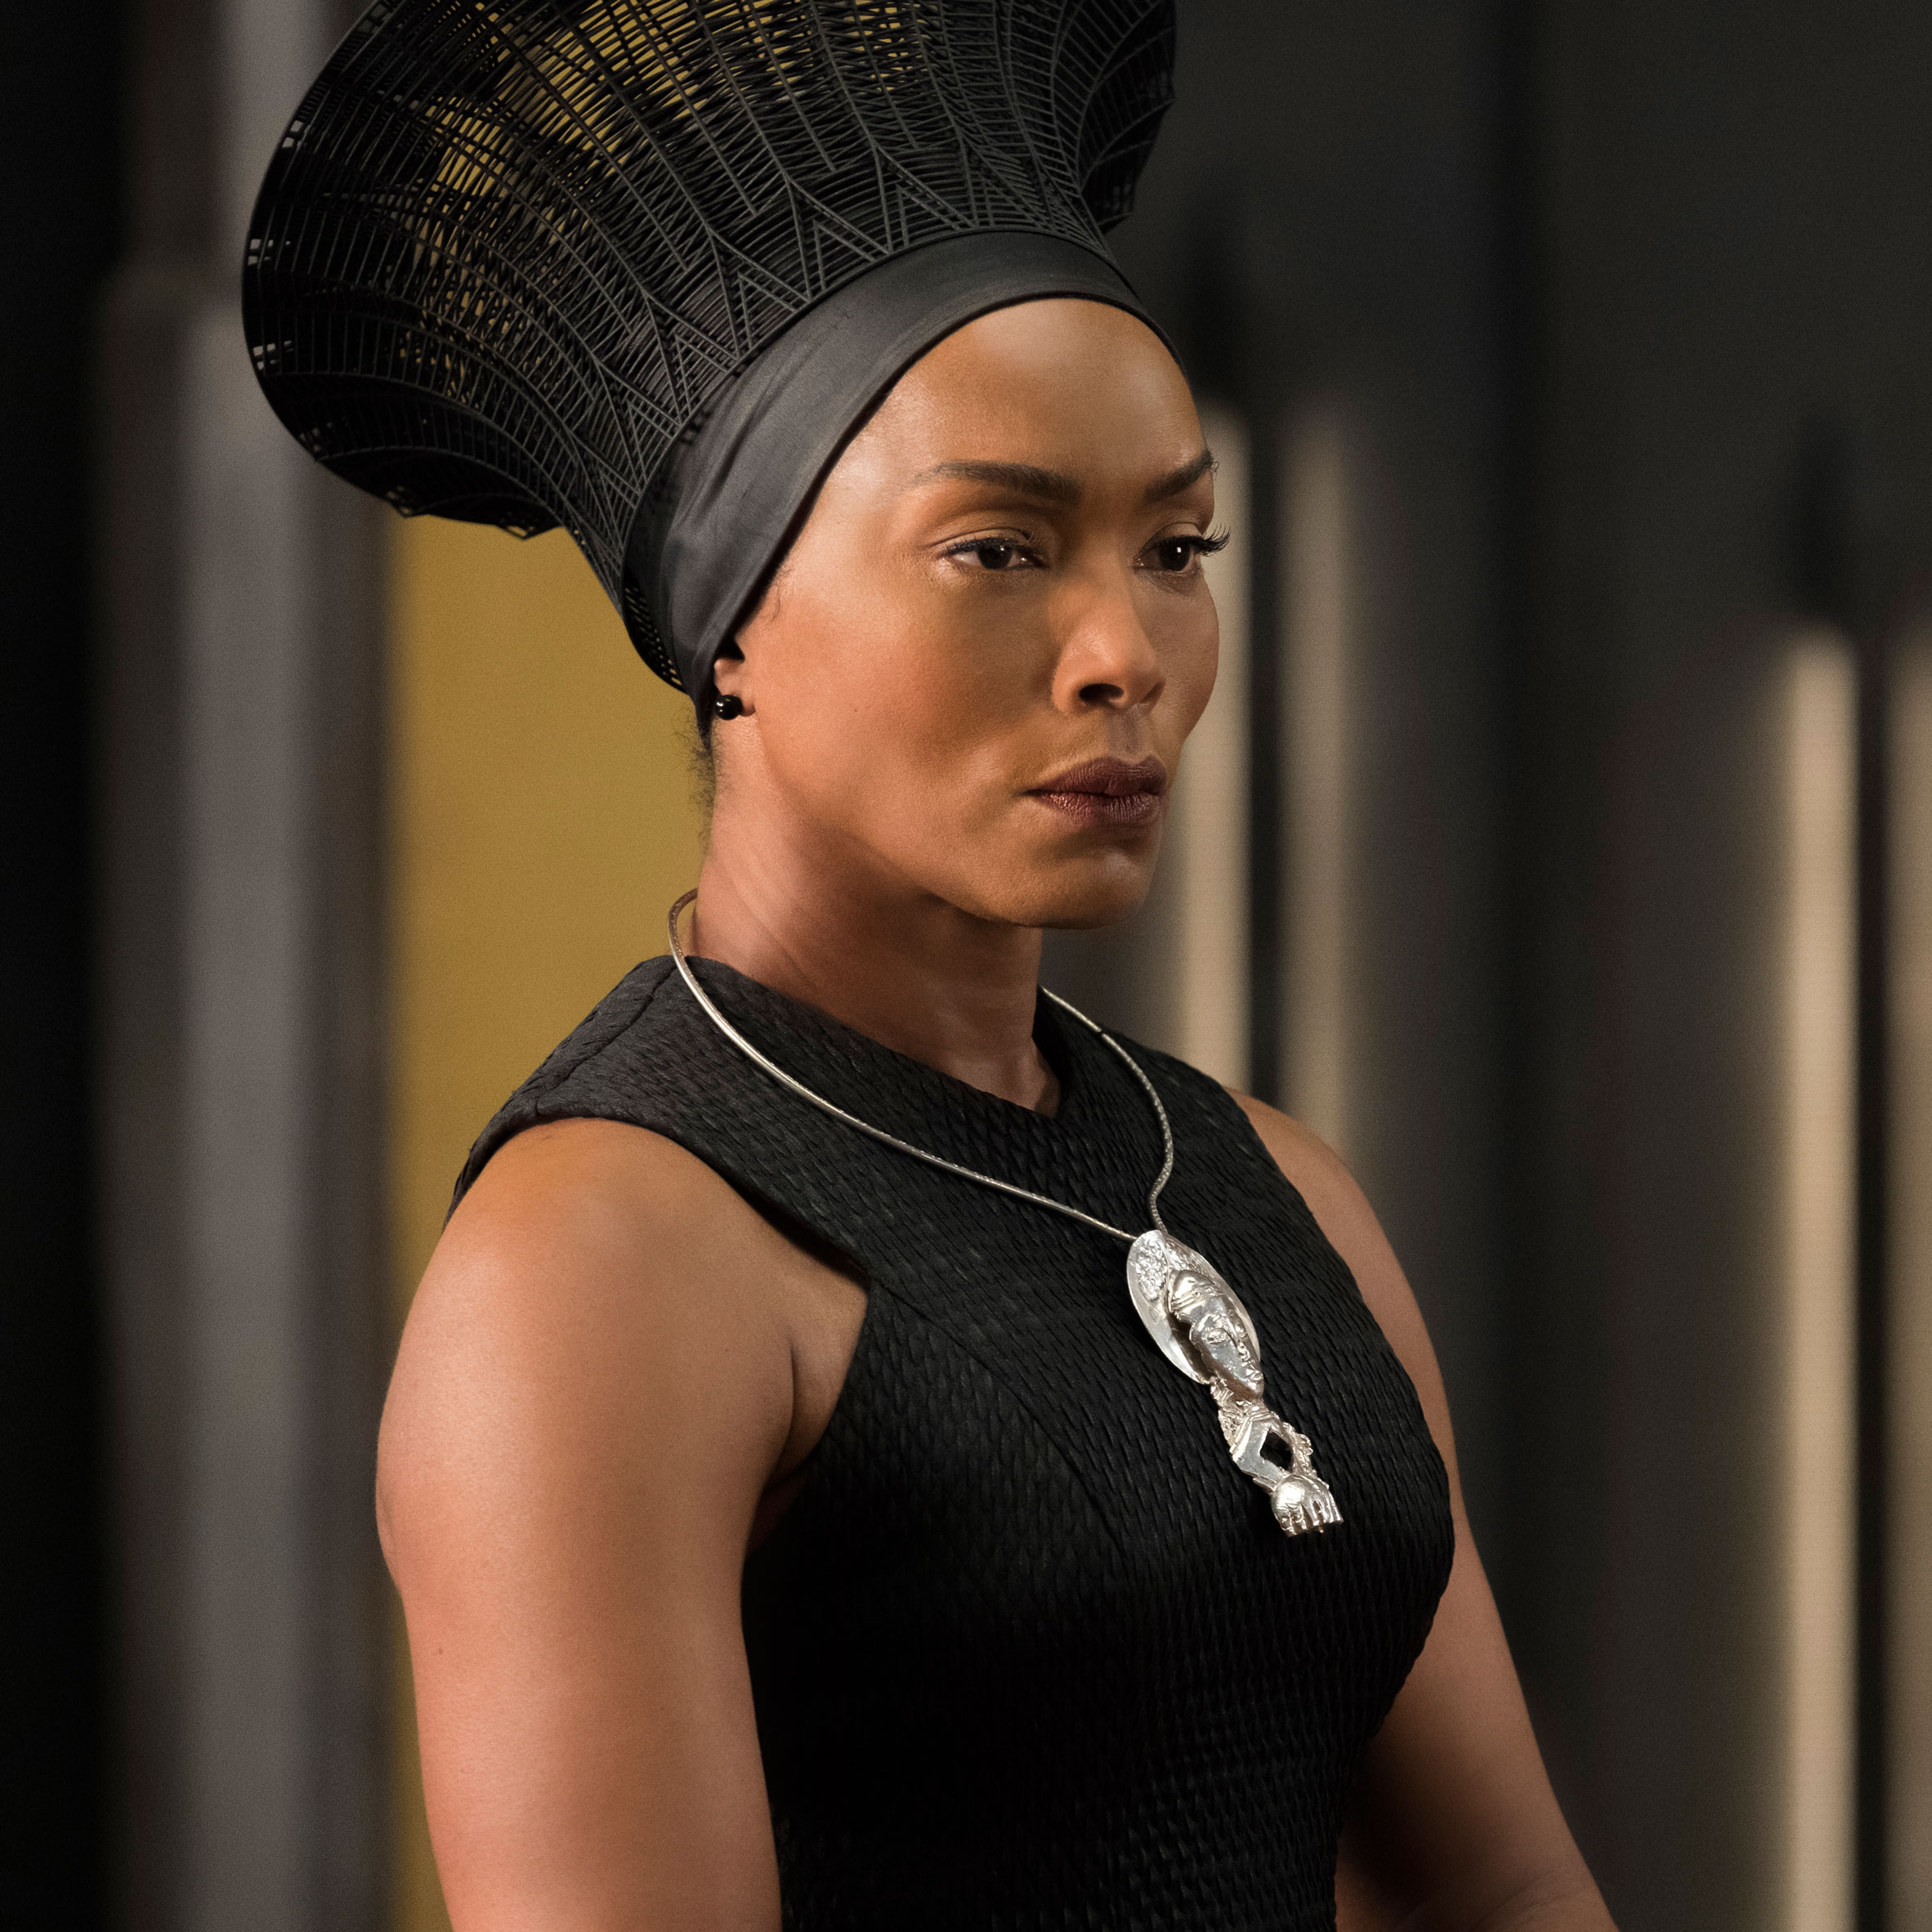 Angela Bassett as Queen Ramonda in Black Panther